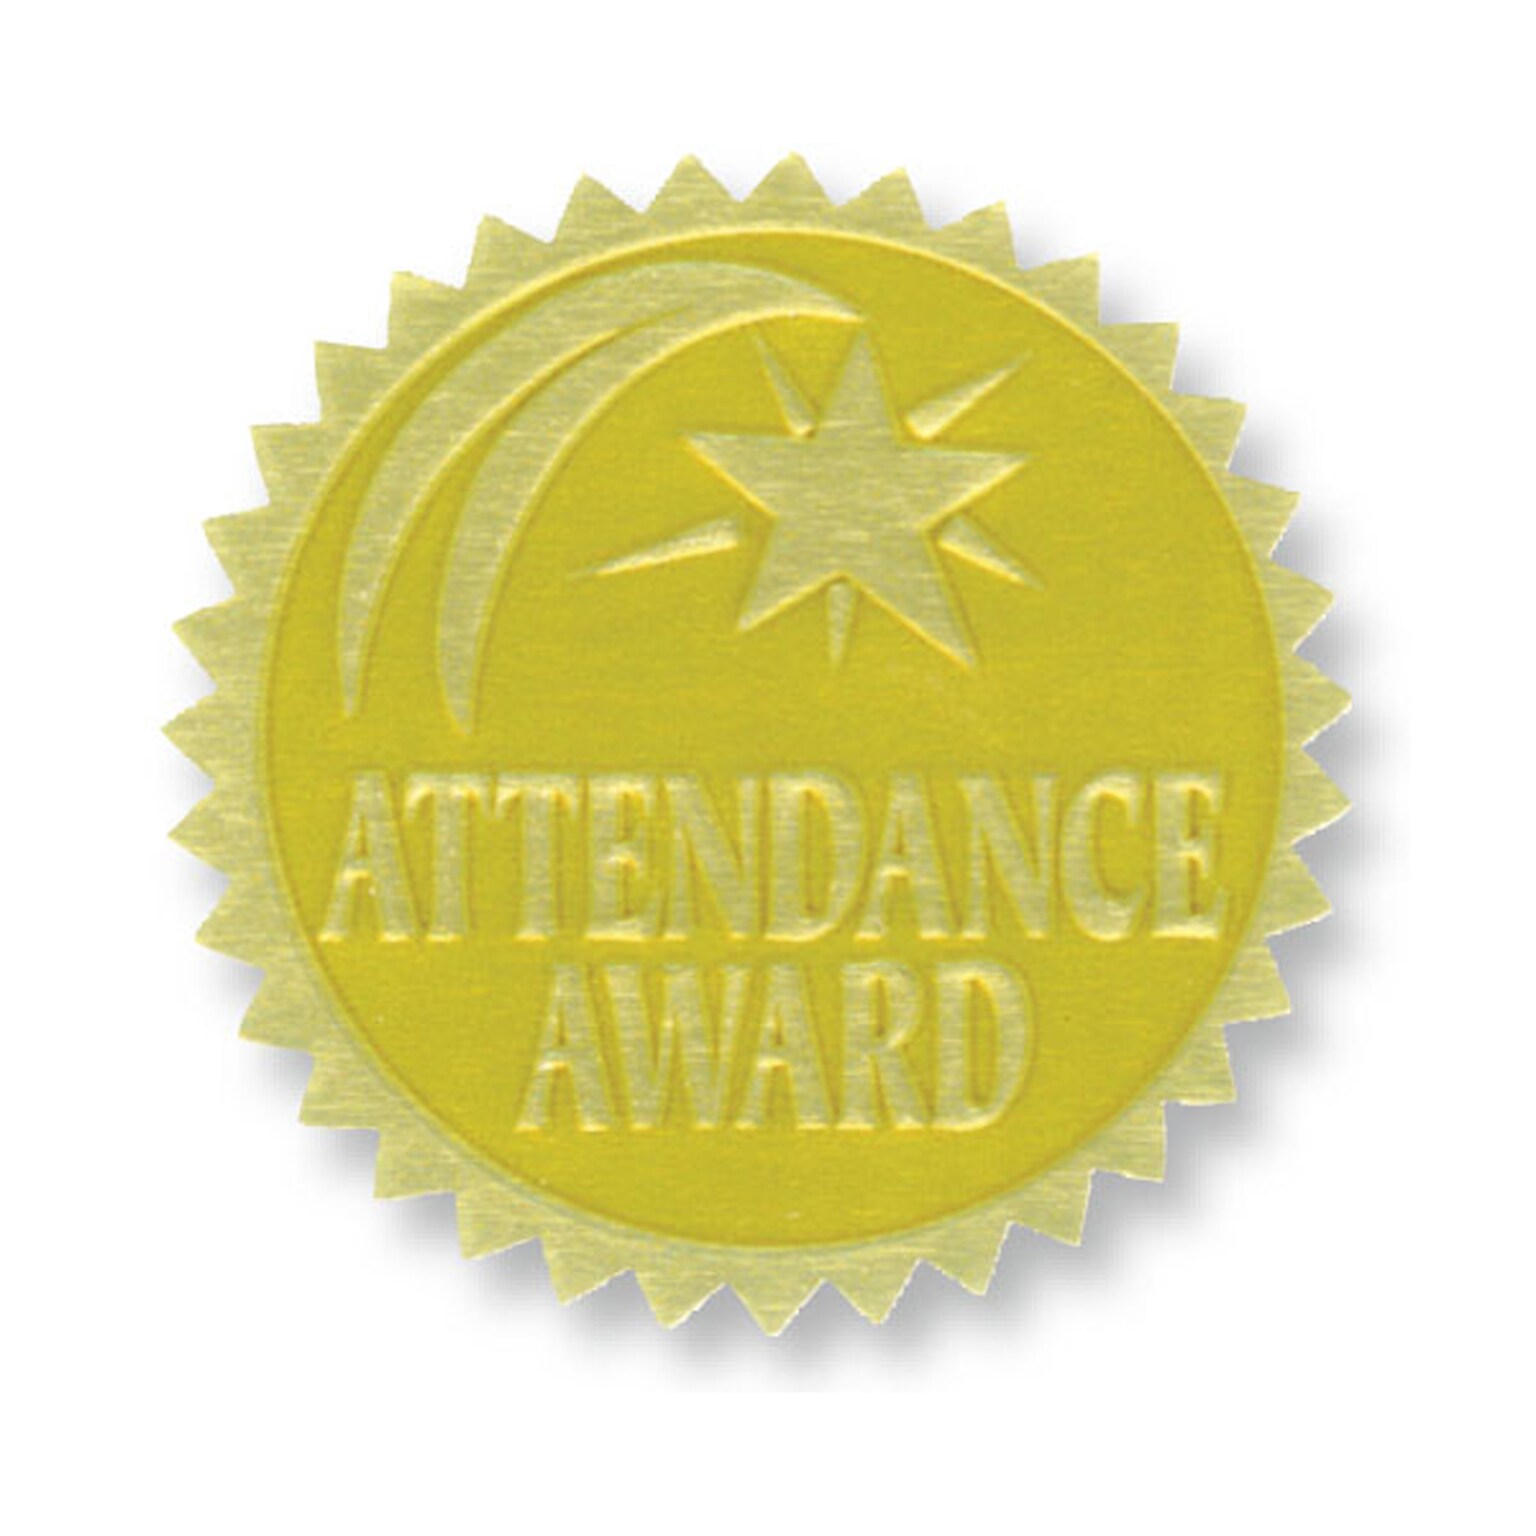 Hayes Attendance Award Gold Foil Embossed Certificate Seals, 1-3/4, Pack of 54 (H-VA375)